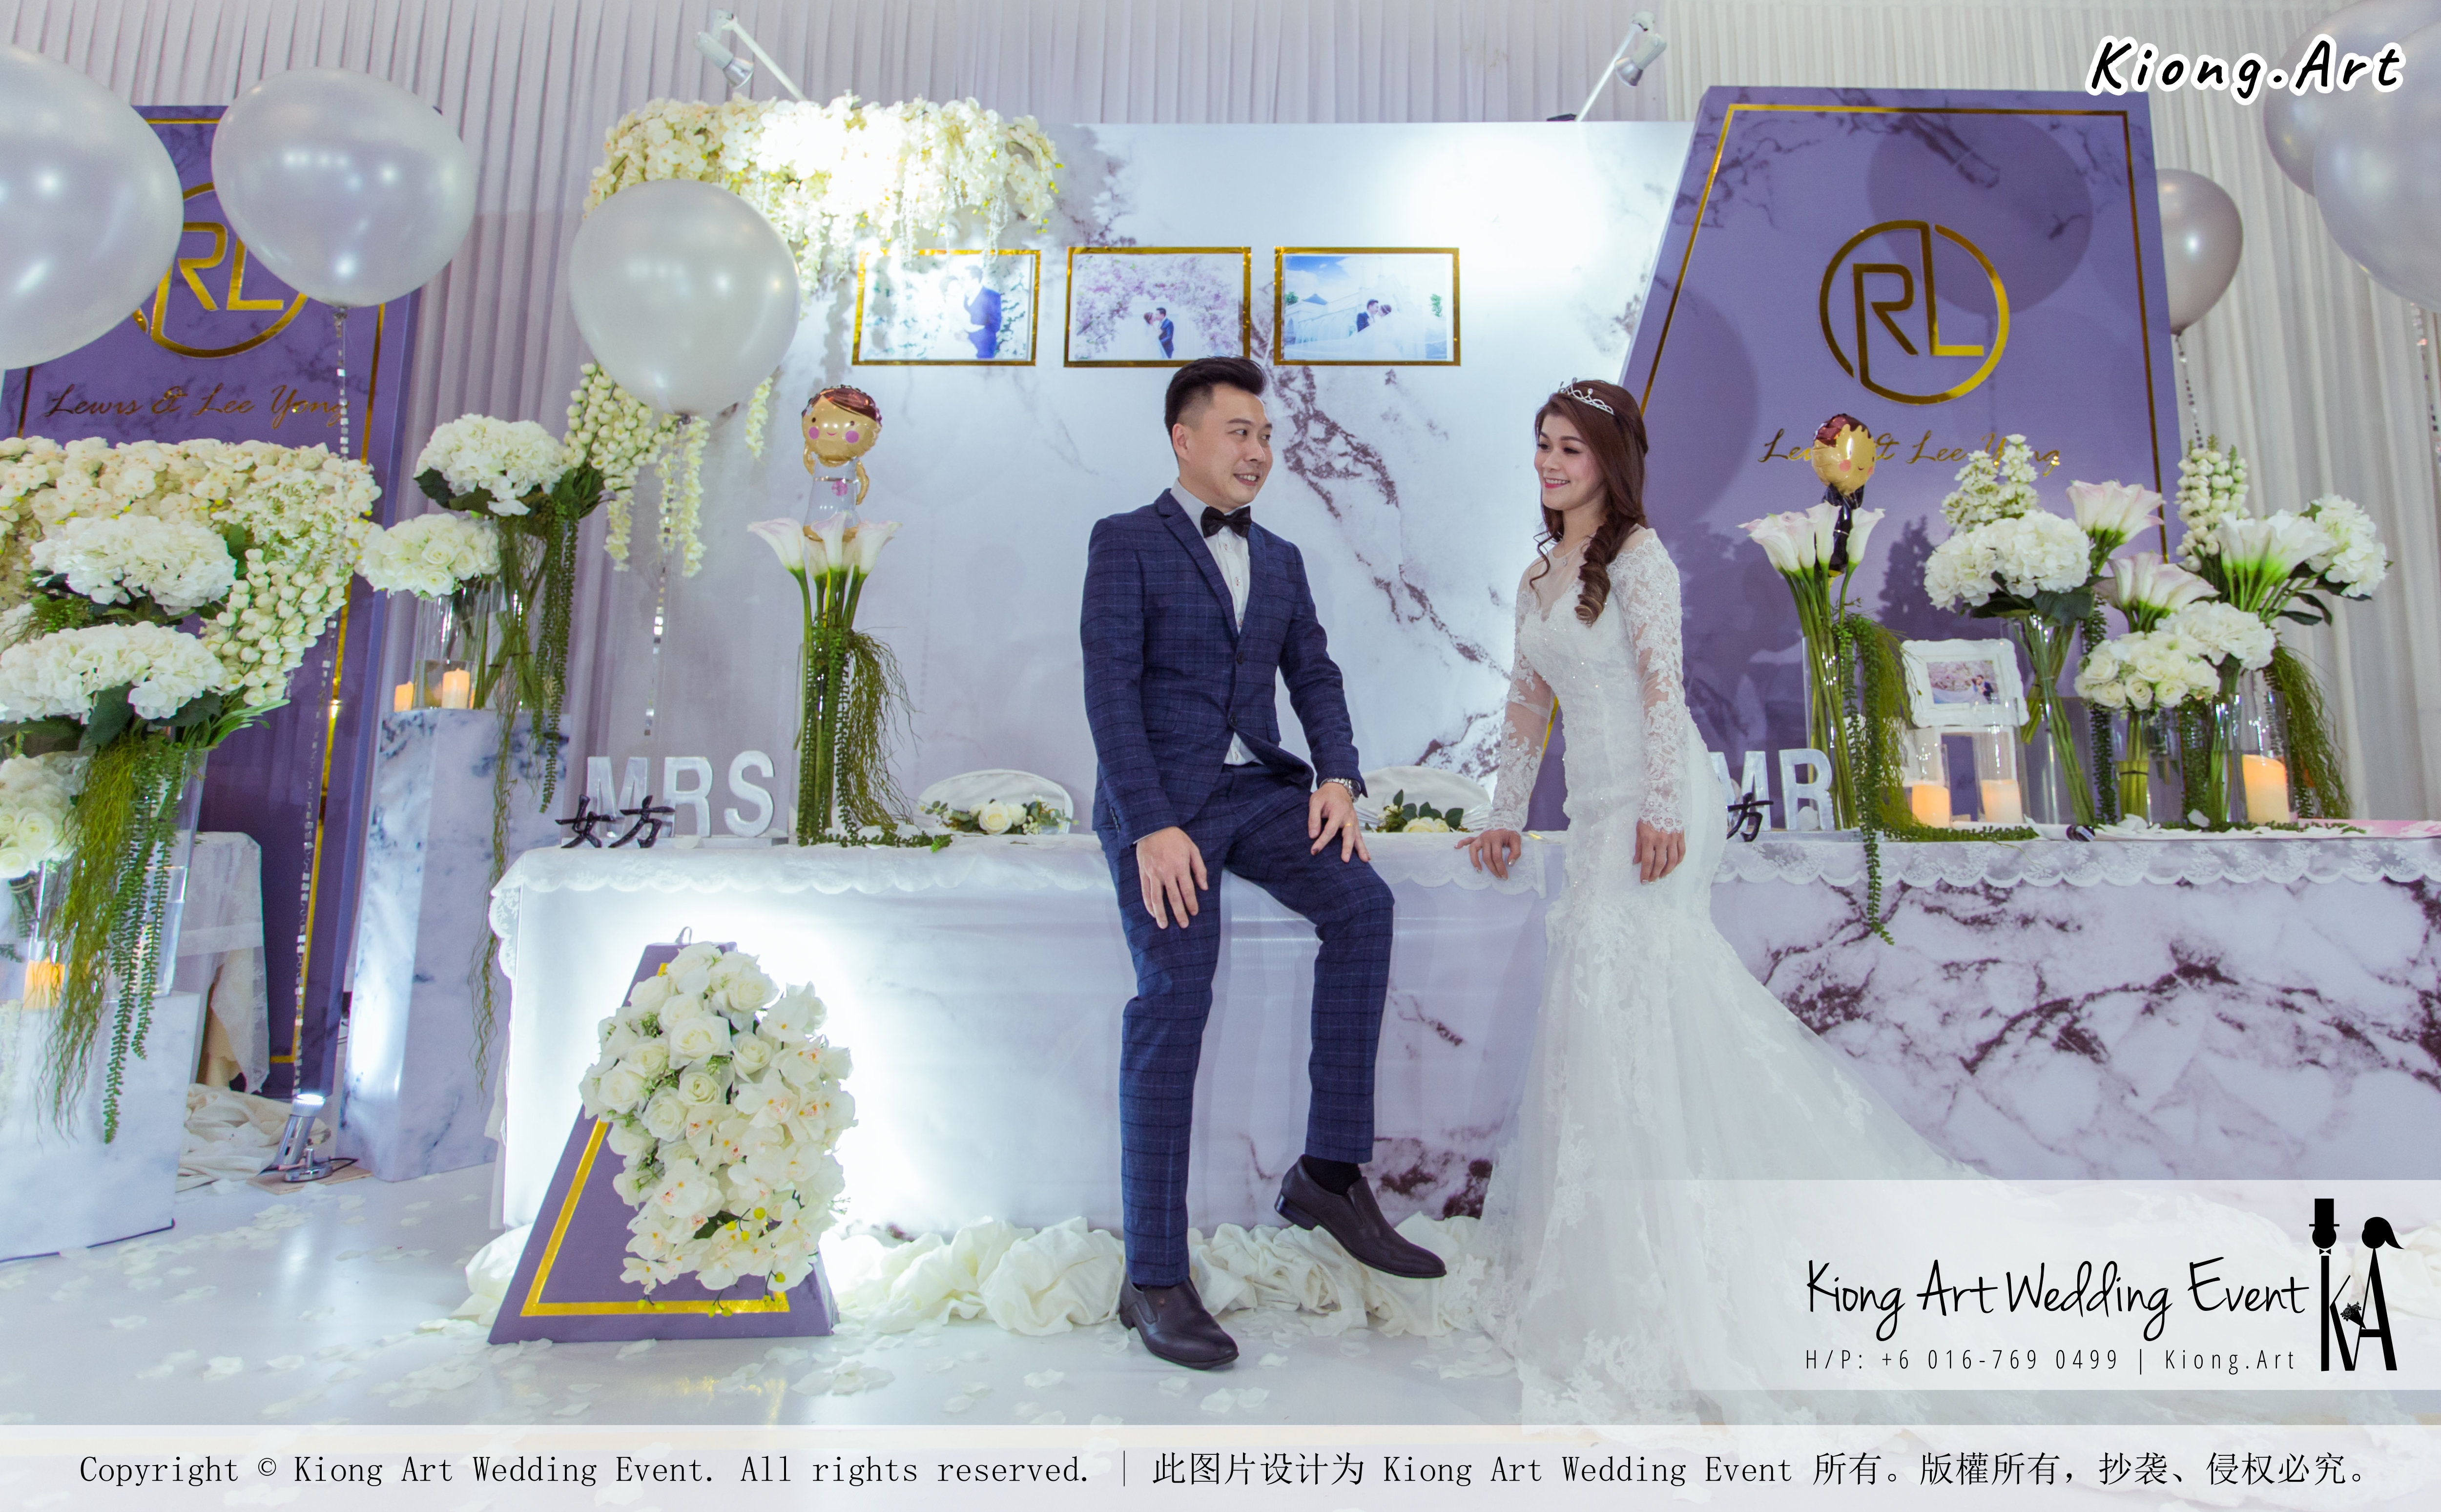 Kiong Art Wedding Event Kuala Lumpur Malaysia Event and Wedding DecorationCompany One-stop Wedding Planning Services Wedding Theme Live Band Wedding Photography Videography A03-45